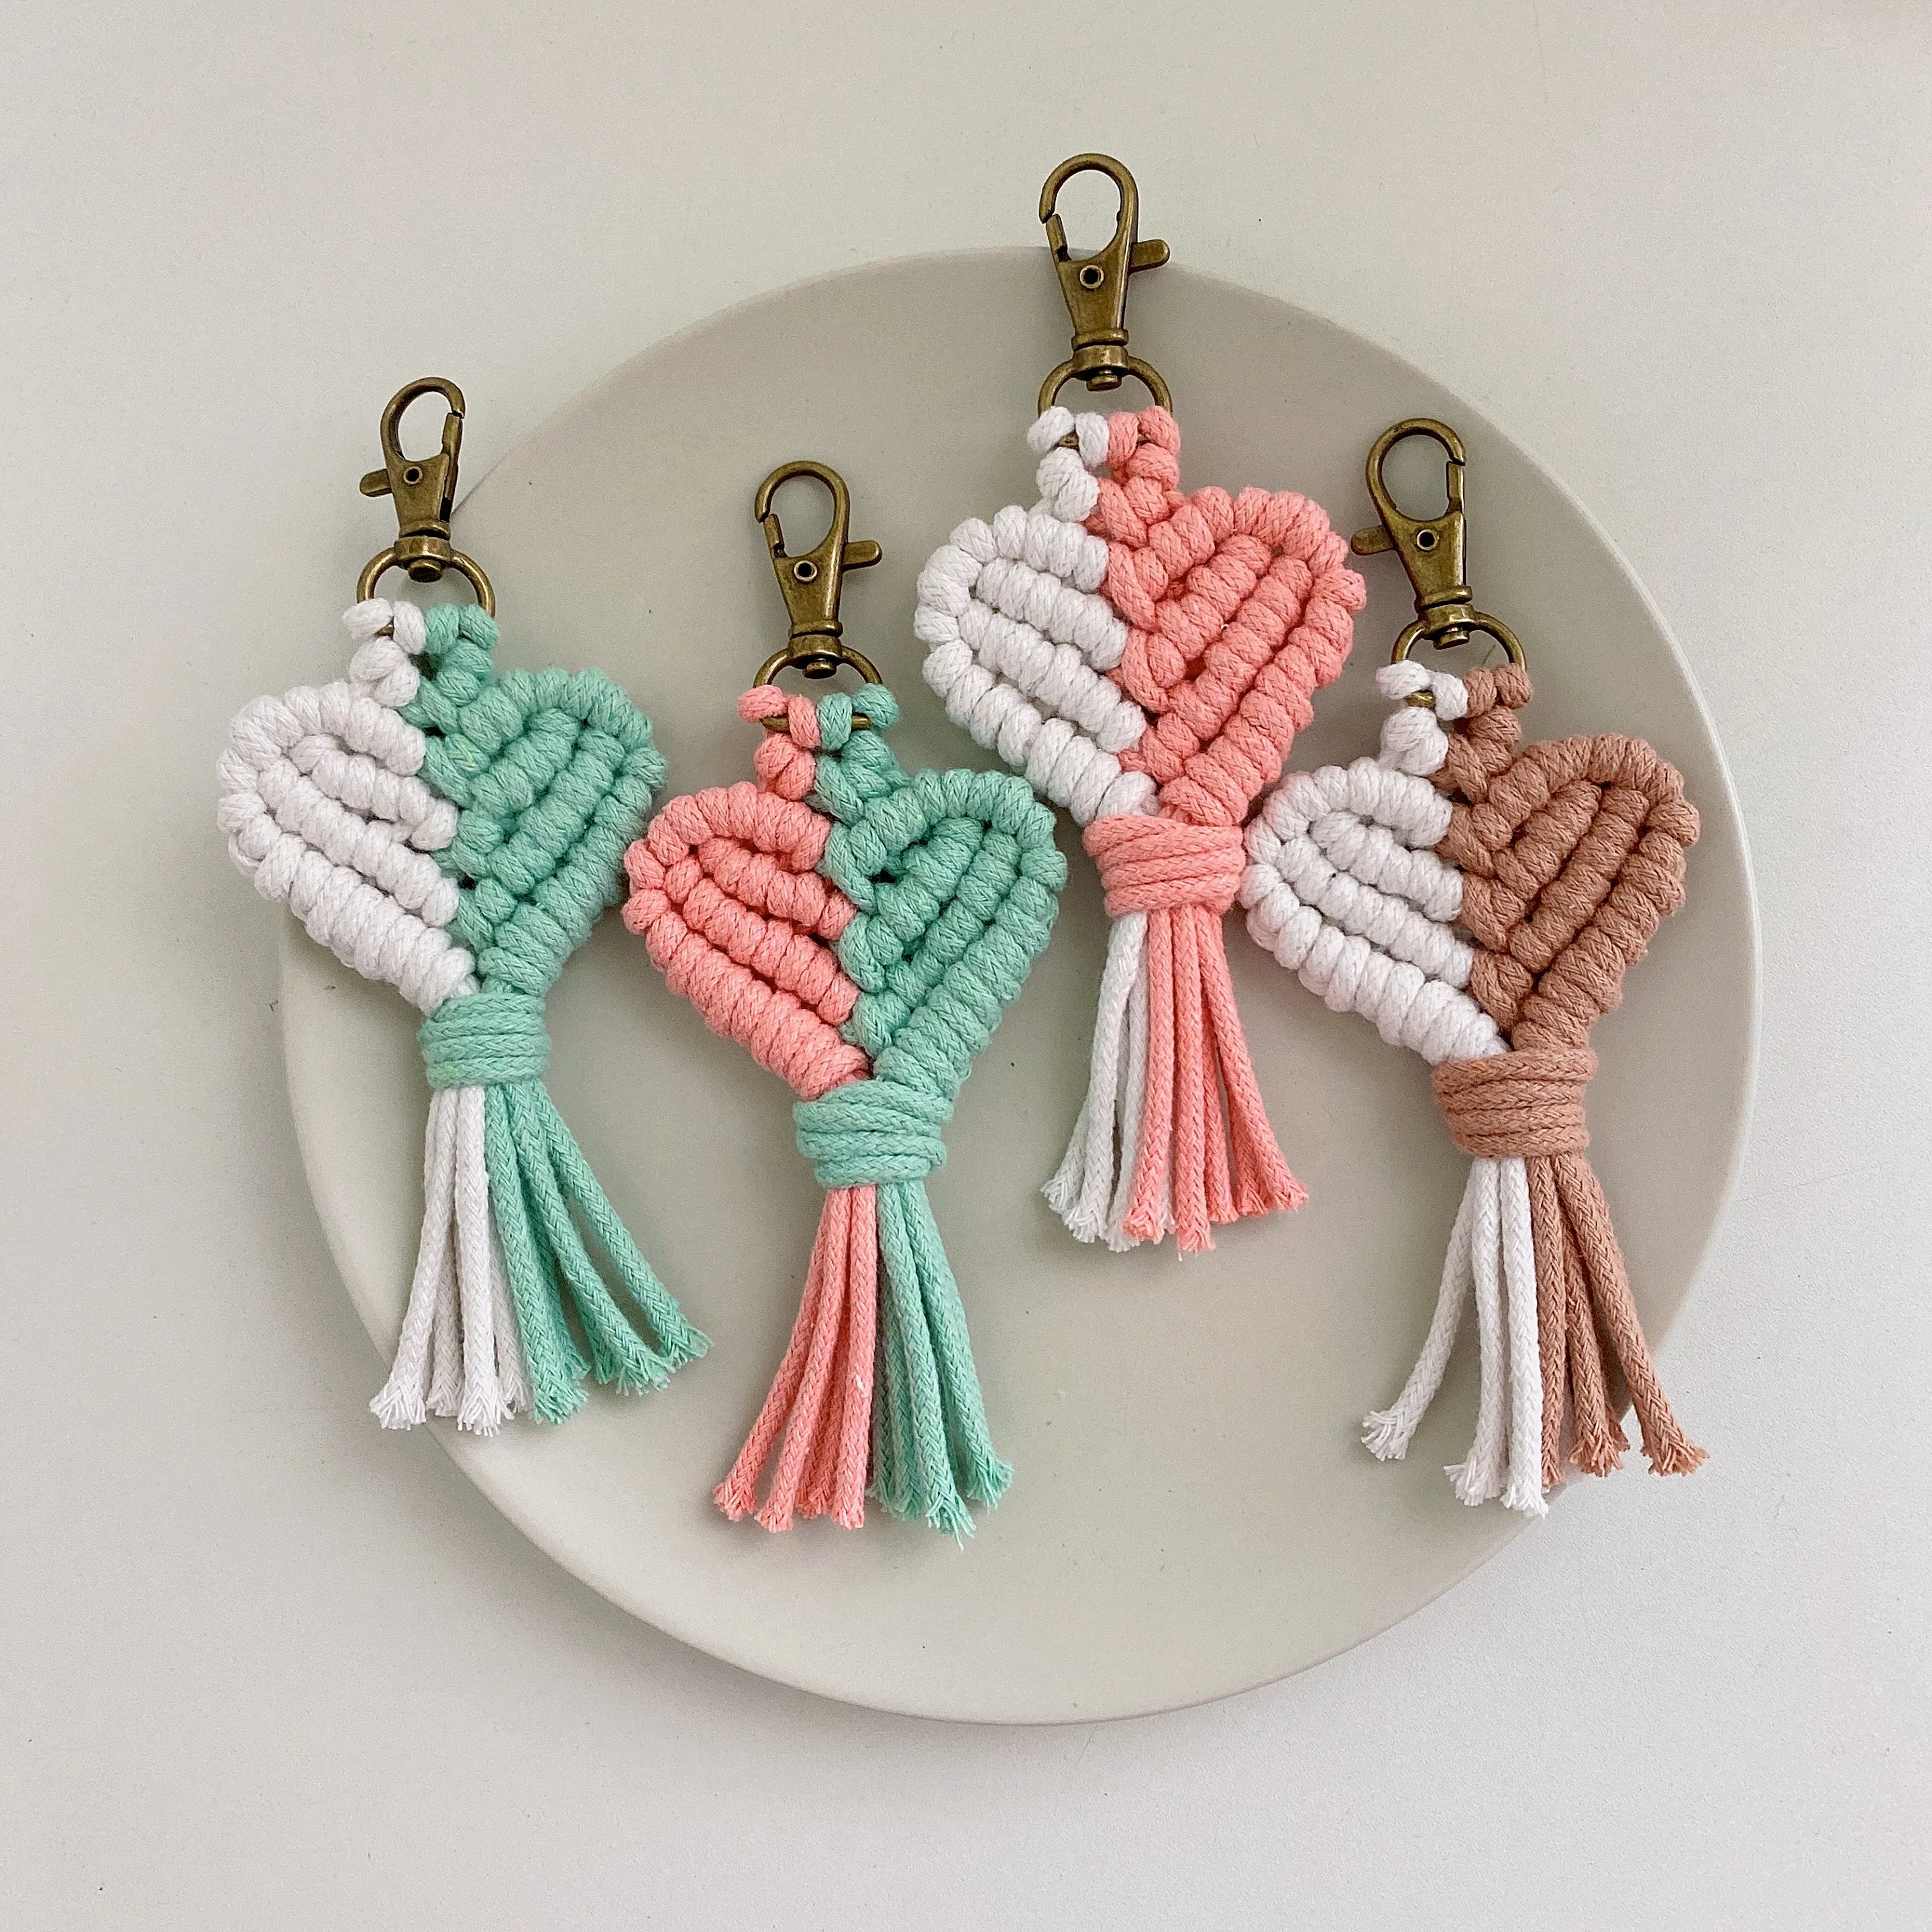 Macrame Hobo Keychain Handmade Heart-shaped Bag Pendant Gift Car Keys Mother's Day gift Fashion Jewelry Accessories Wholesale